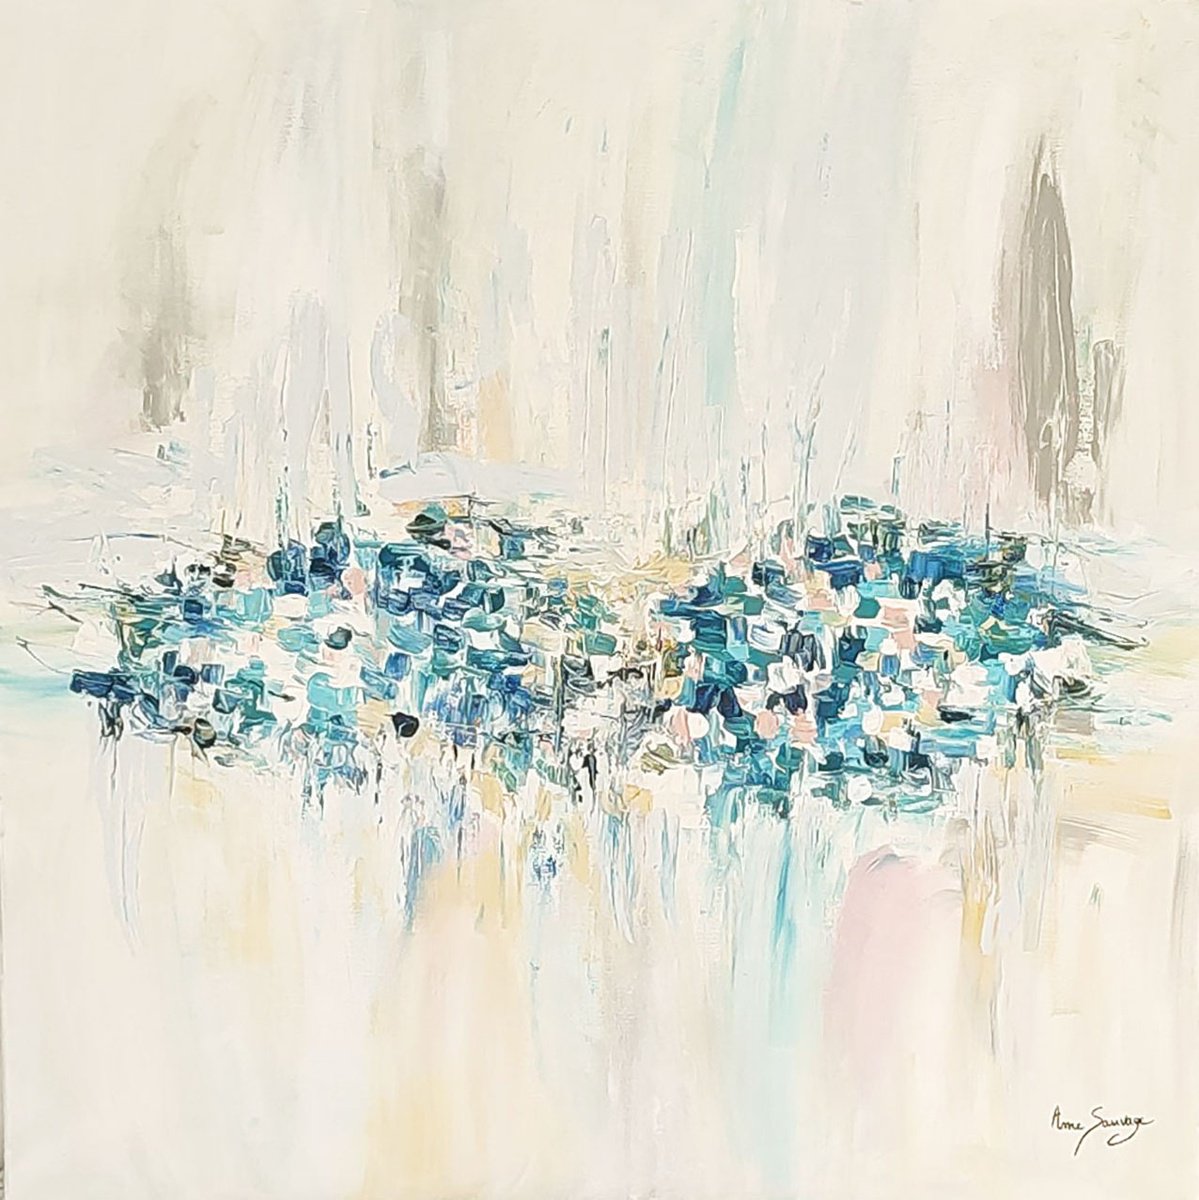 Fleurs bleues des champs by AME SAUVAGE